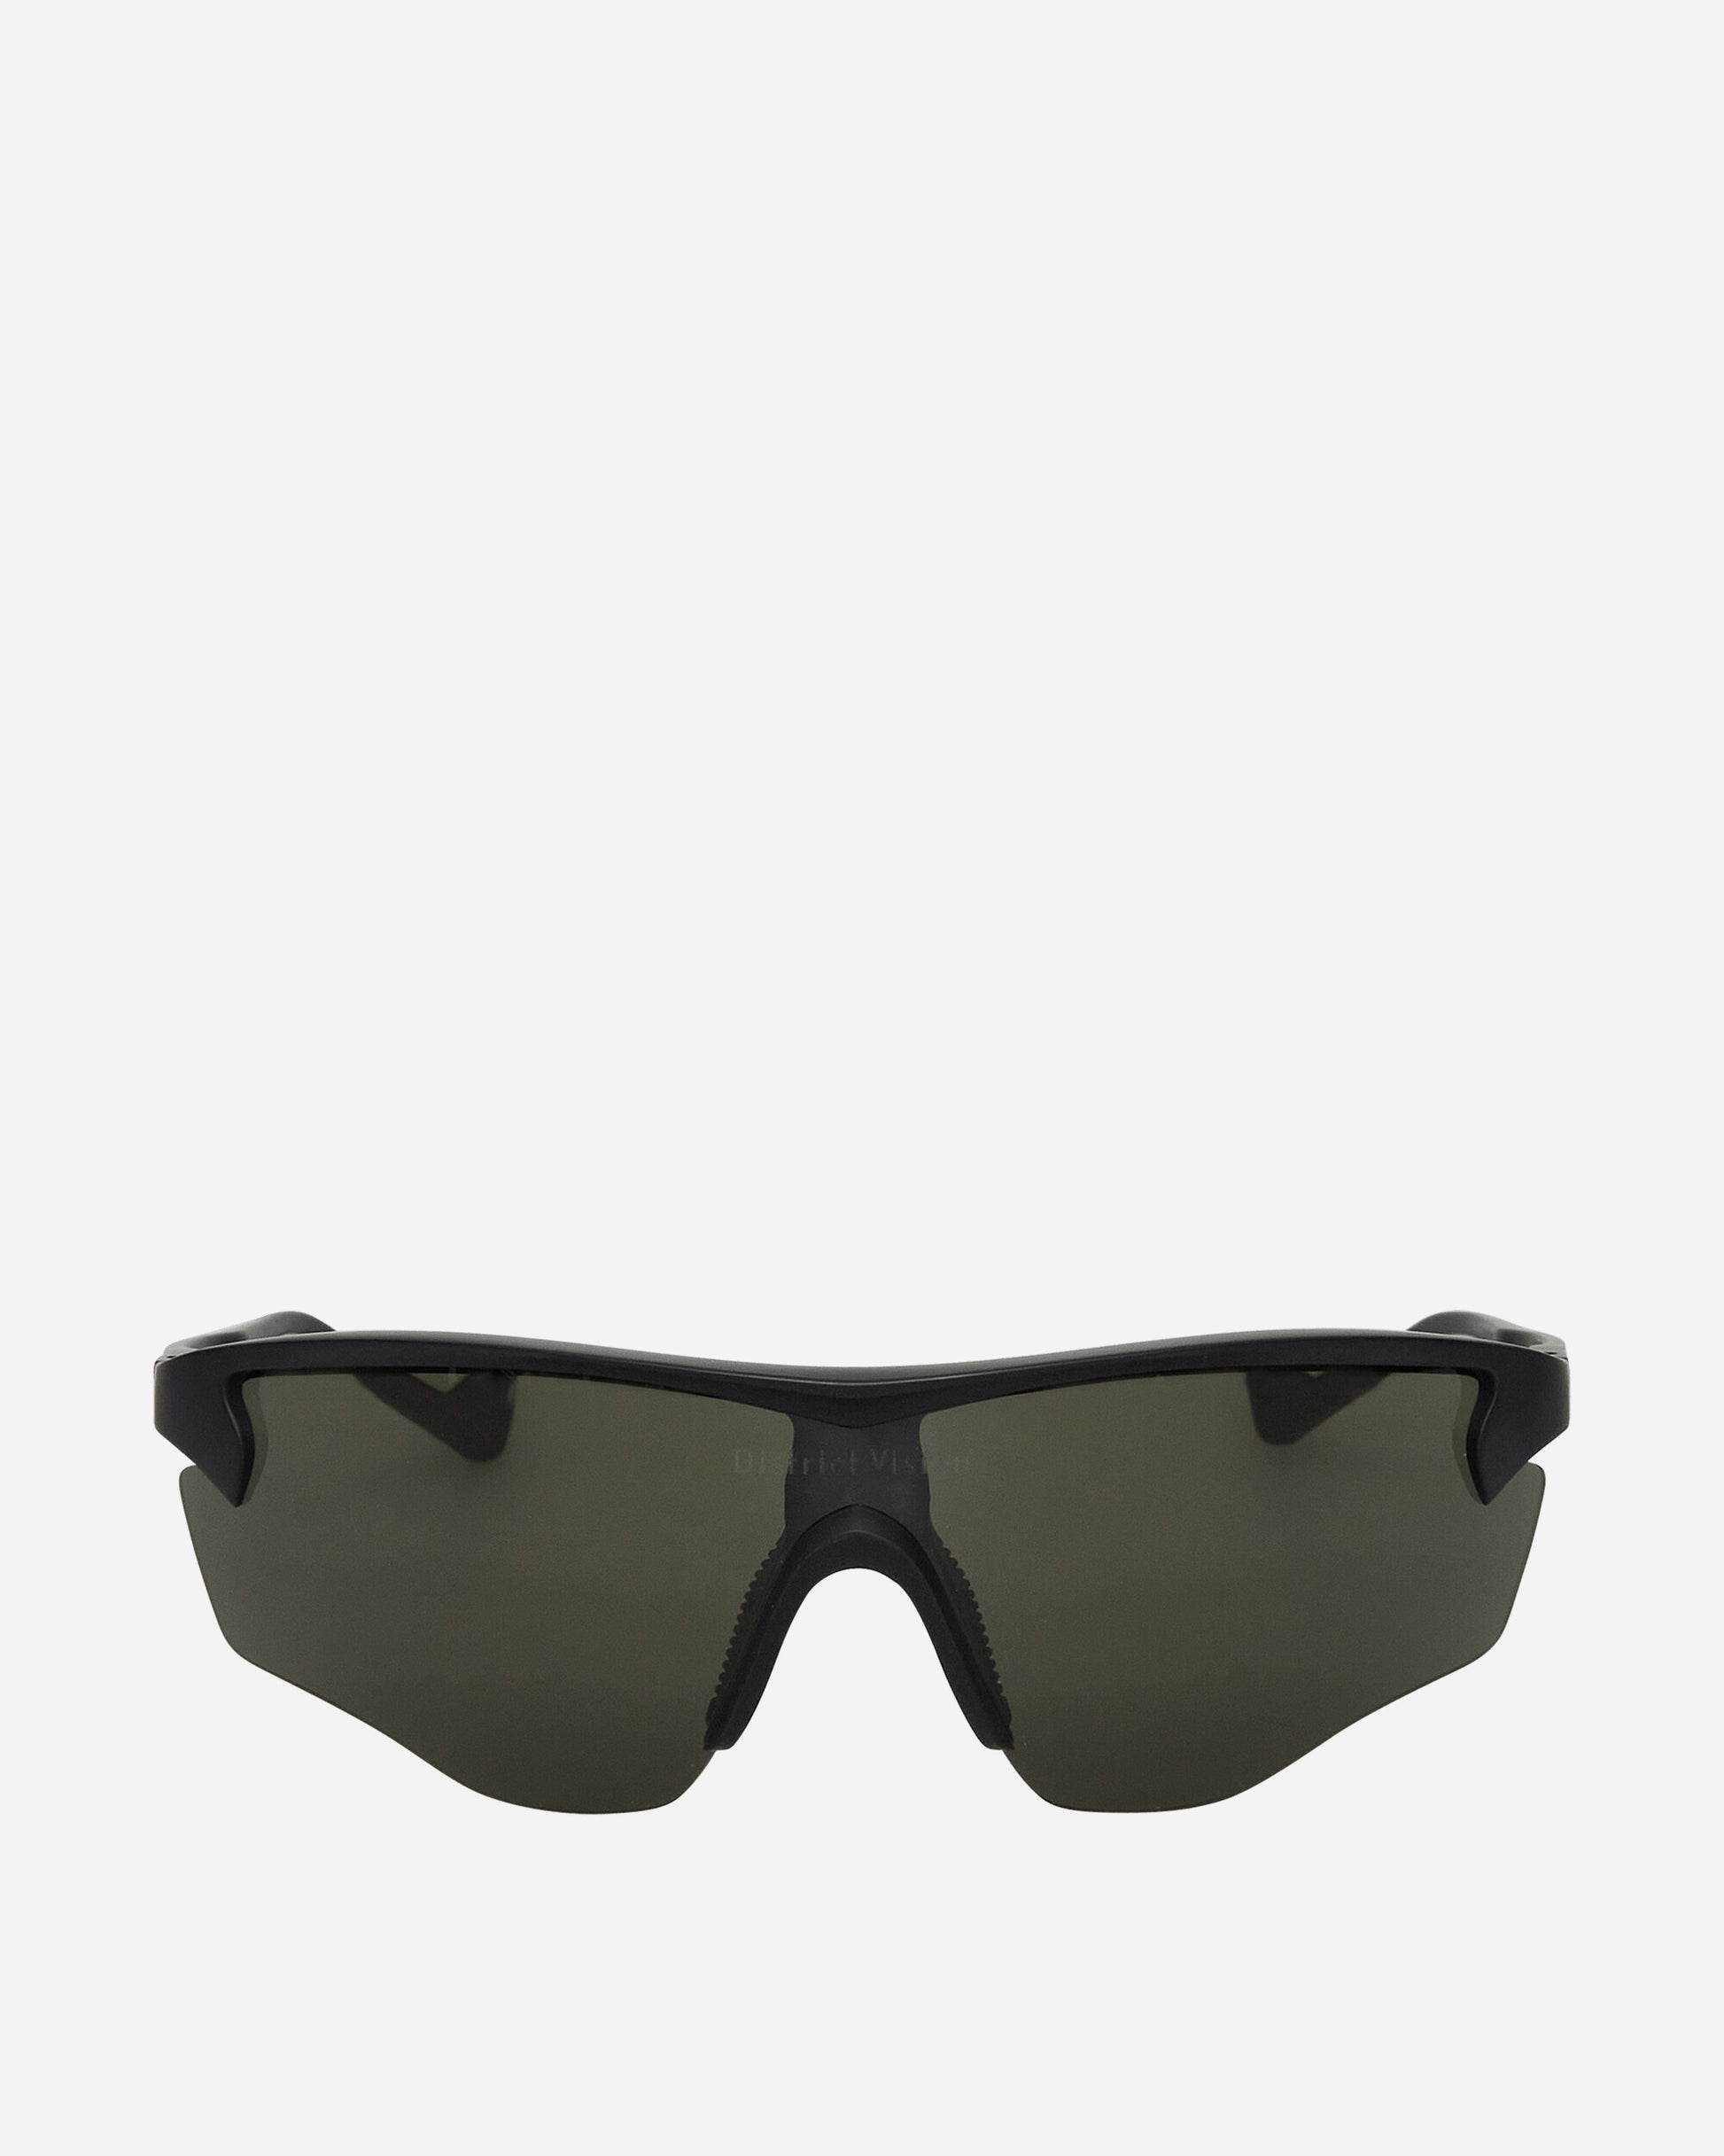 District Vision Junya Racer Black/D+ G15 Eyewear Sunglasses DVG003 BG15